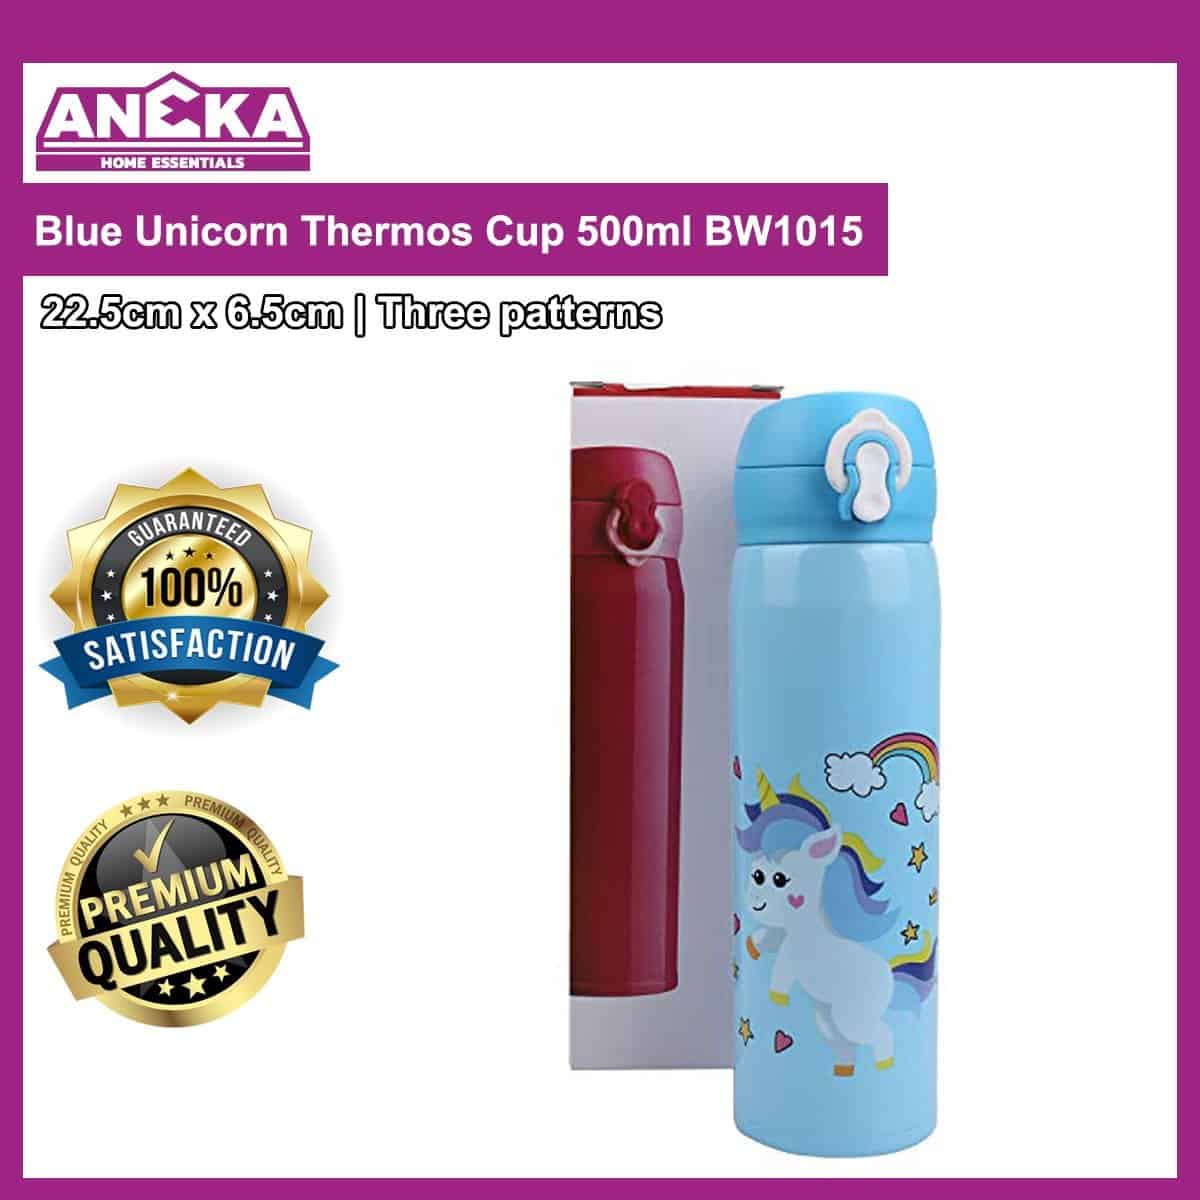 BW1015 Unicorn Thermos Cup - Blue (Random Color)